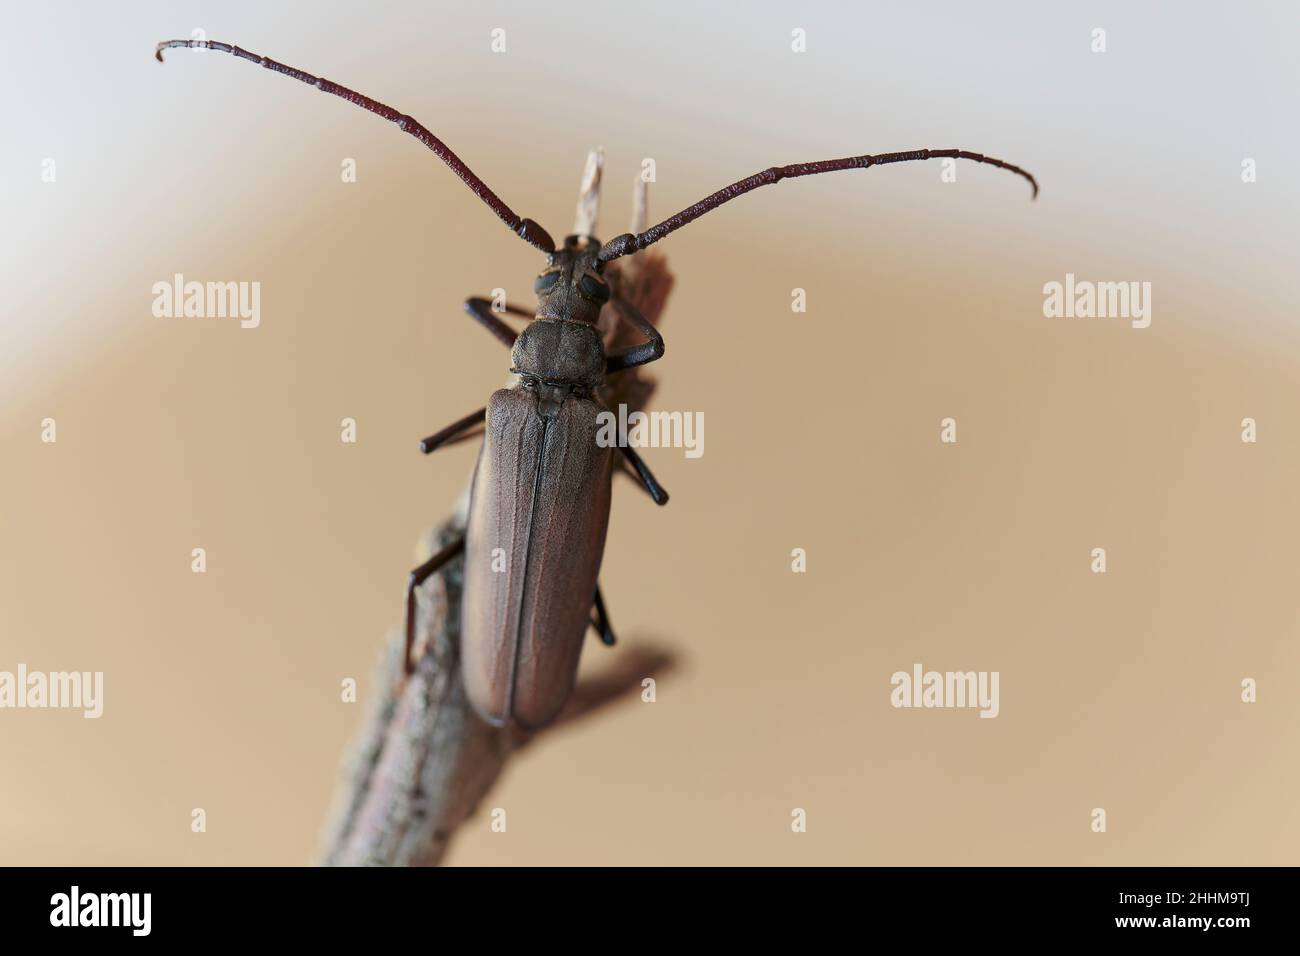 Aegosoma scabricorne an endangered big European longhorn beetle in close view Stock Photo